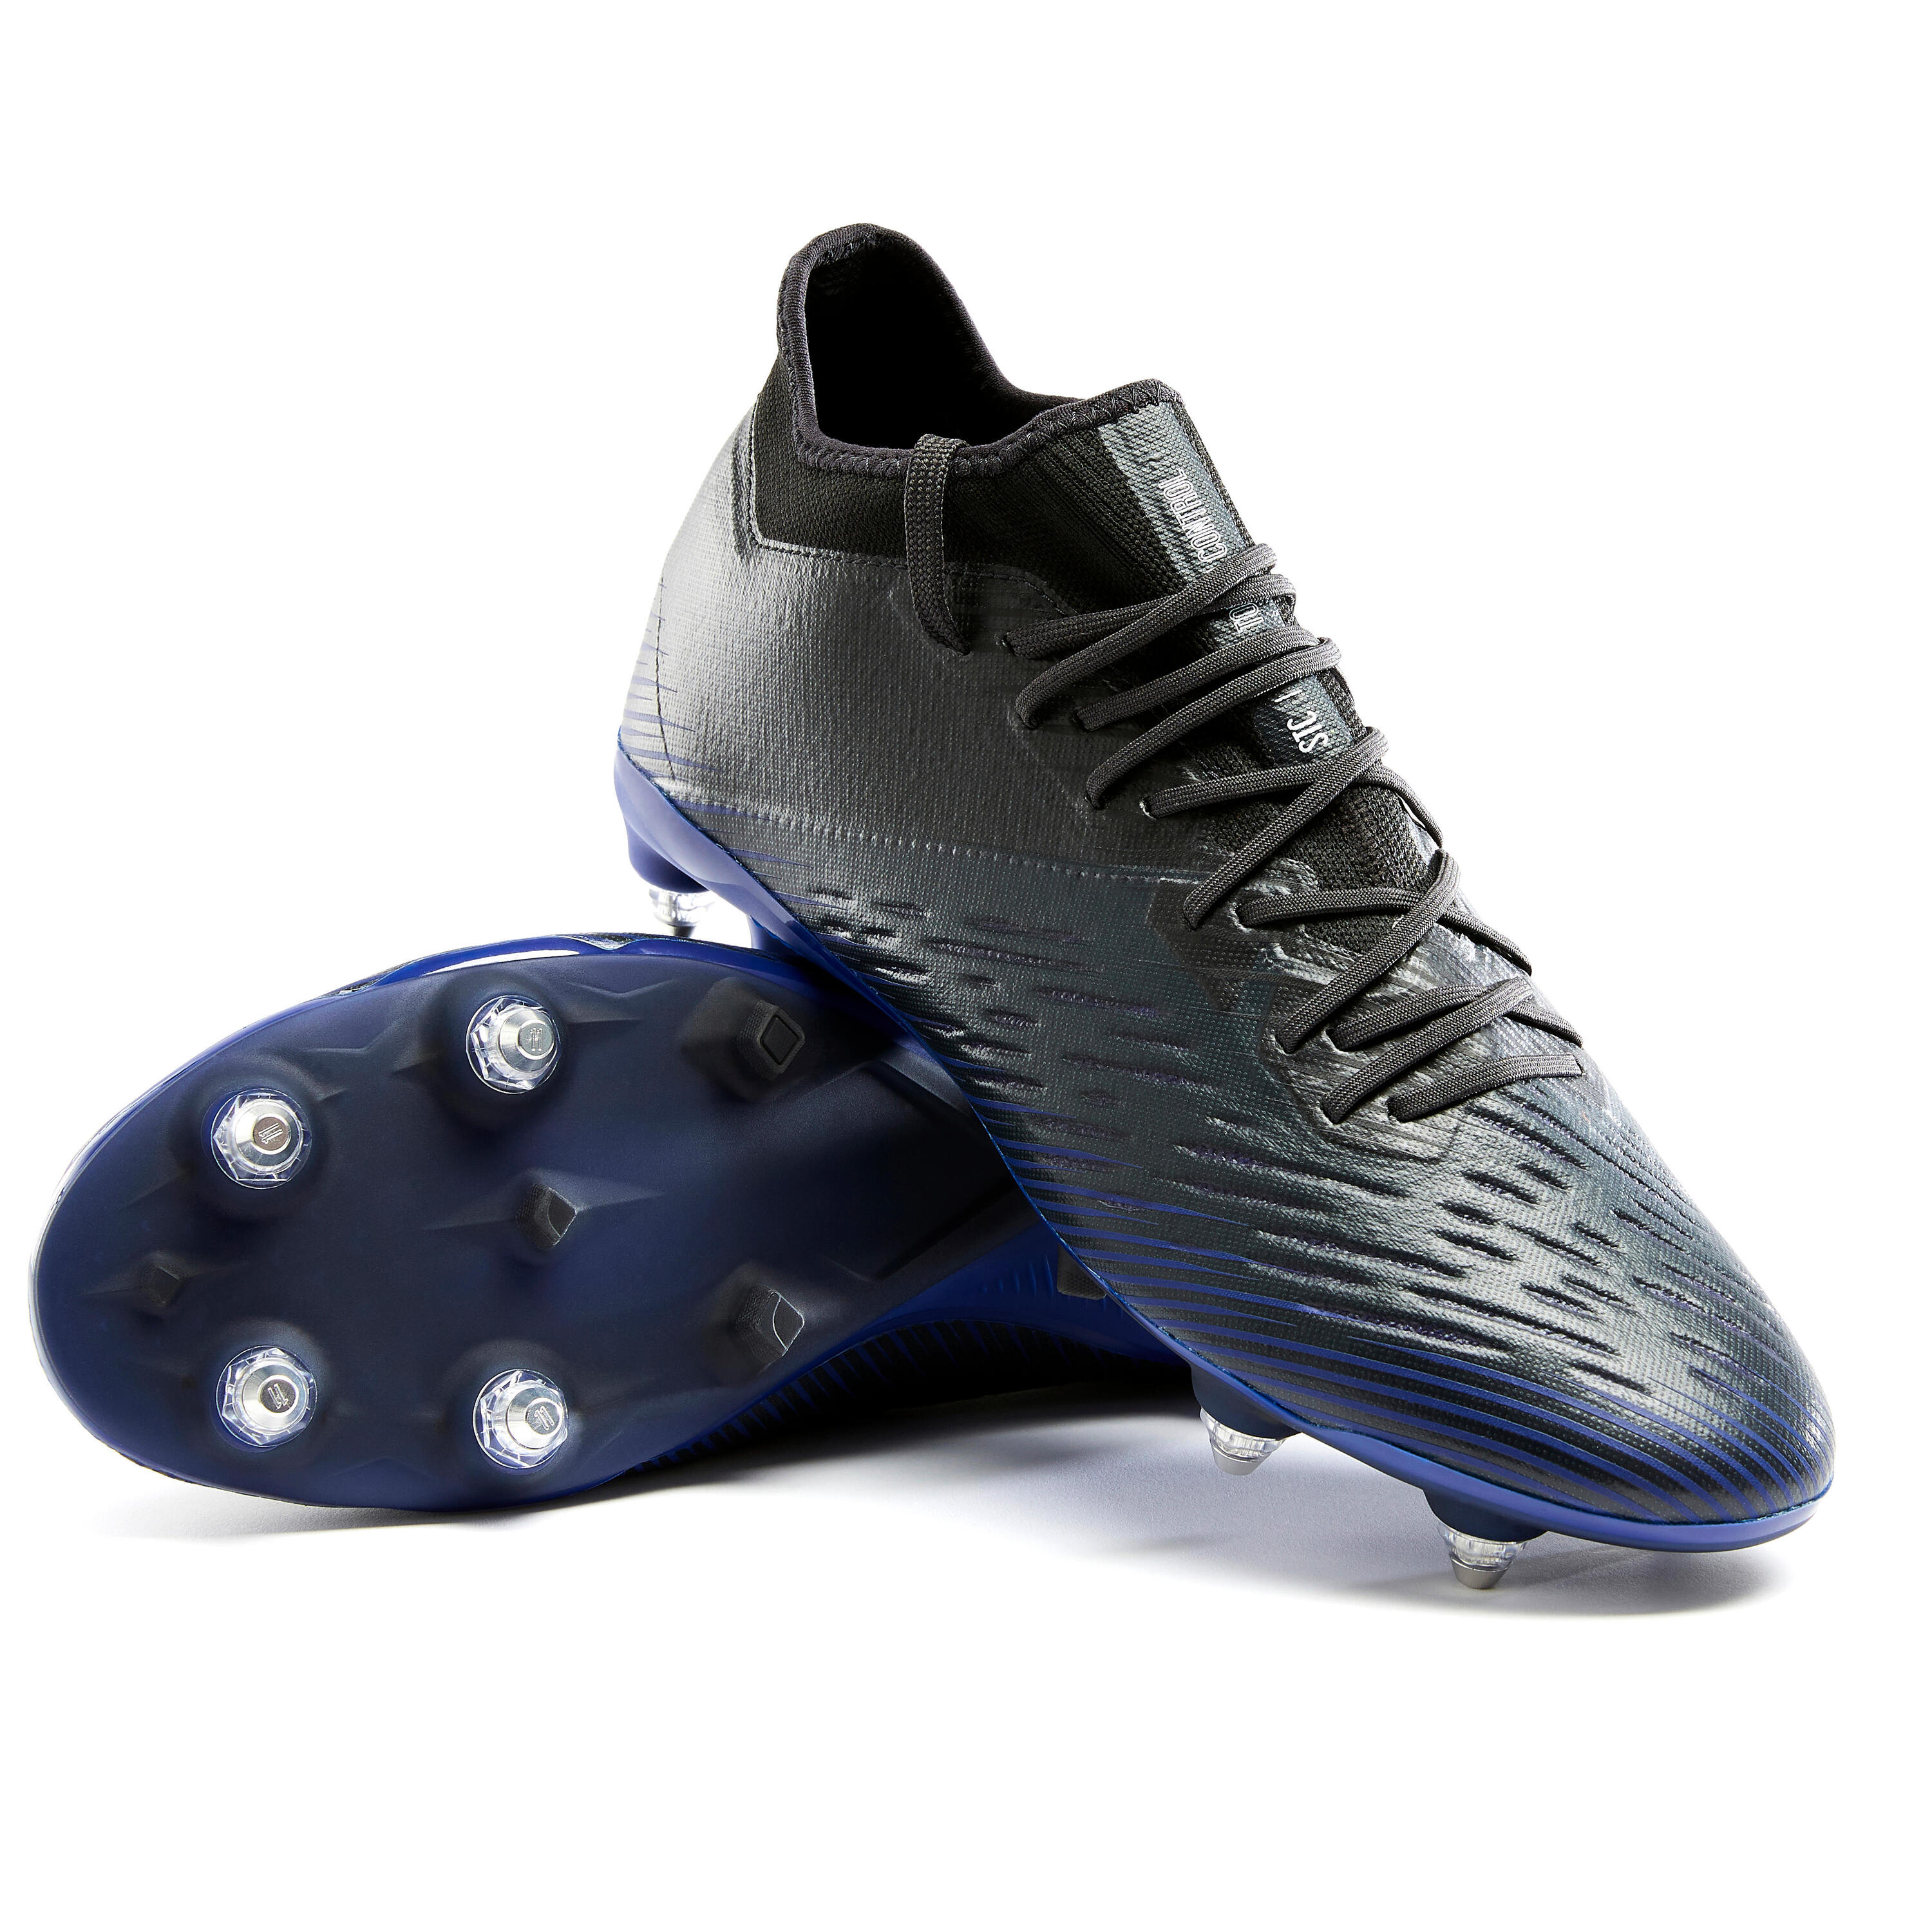 Adult Soft Ground Football Boots CLR SG - Black/Blue 7/8